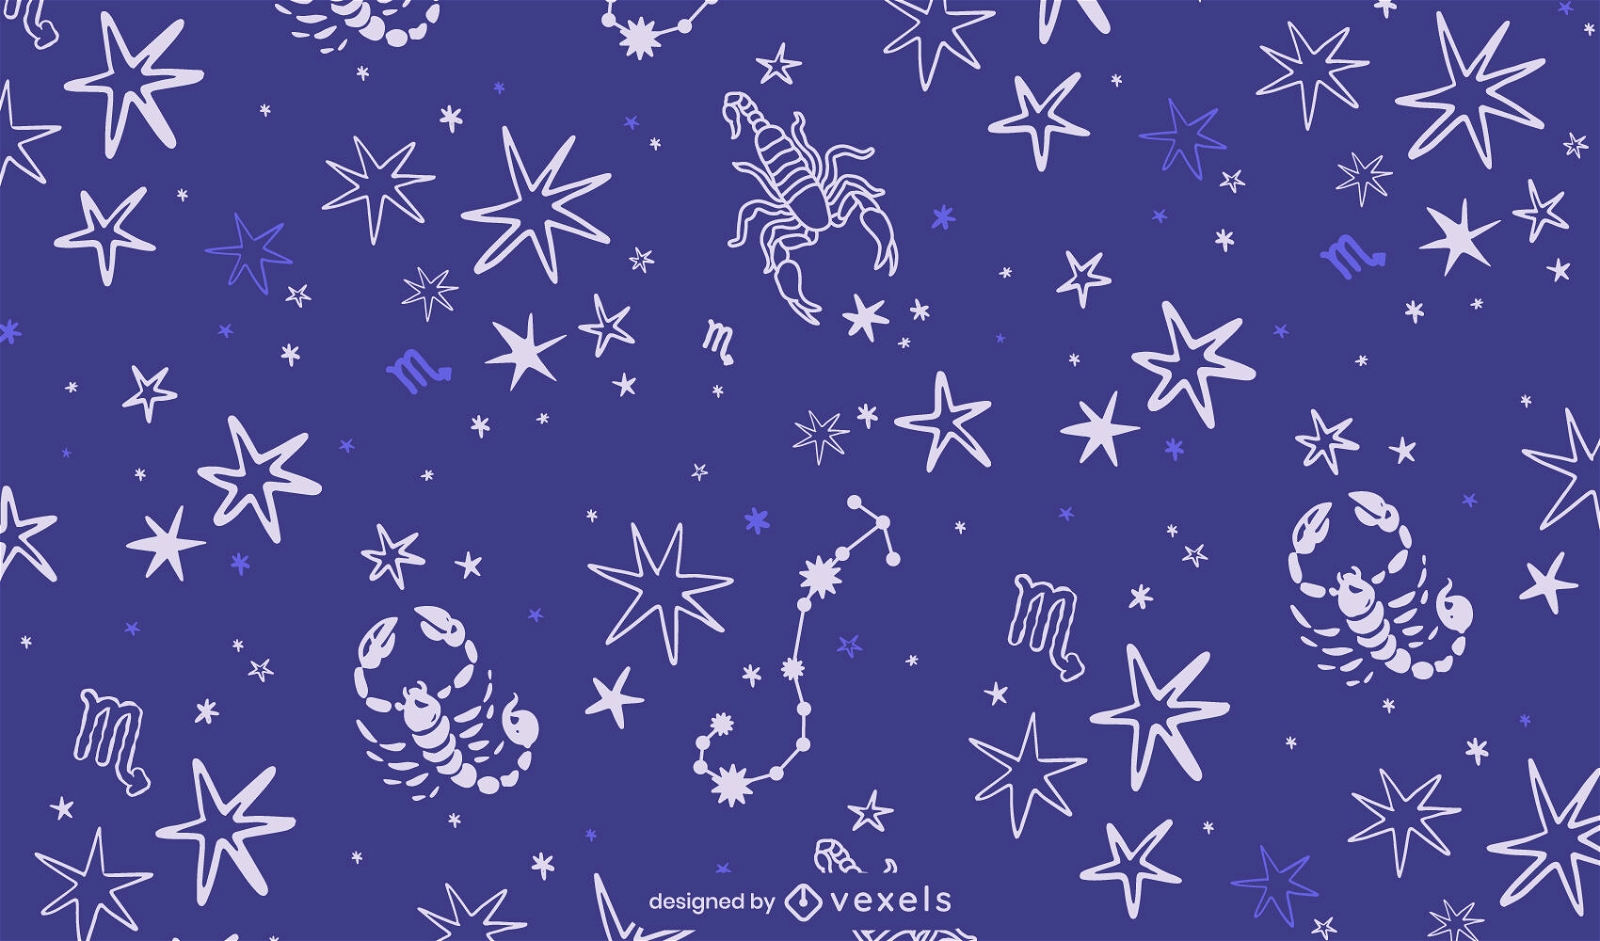 Scorpio constellation zodiac sign pattern